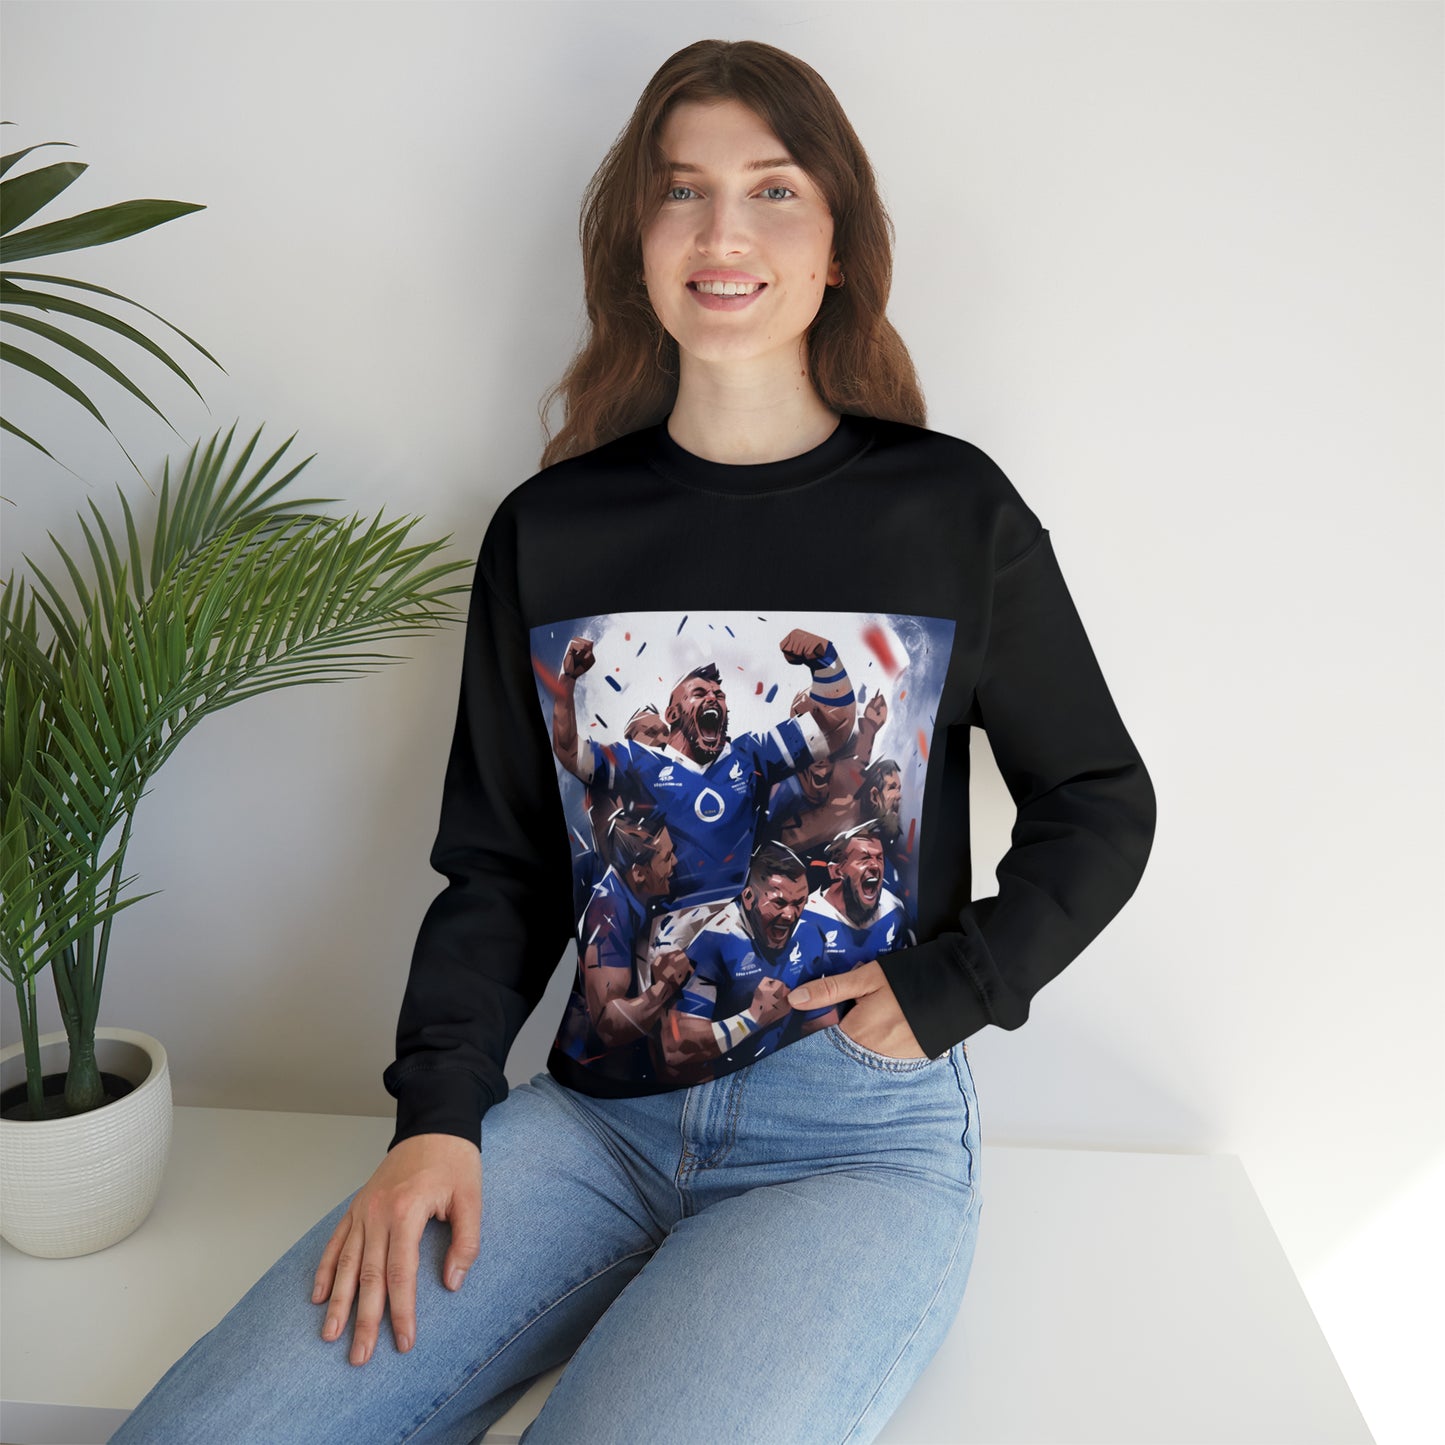 France Celebrating - dark sweatshirts